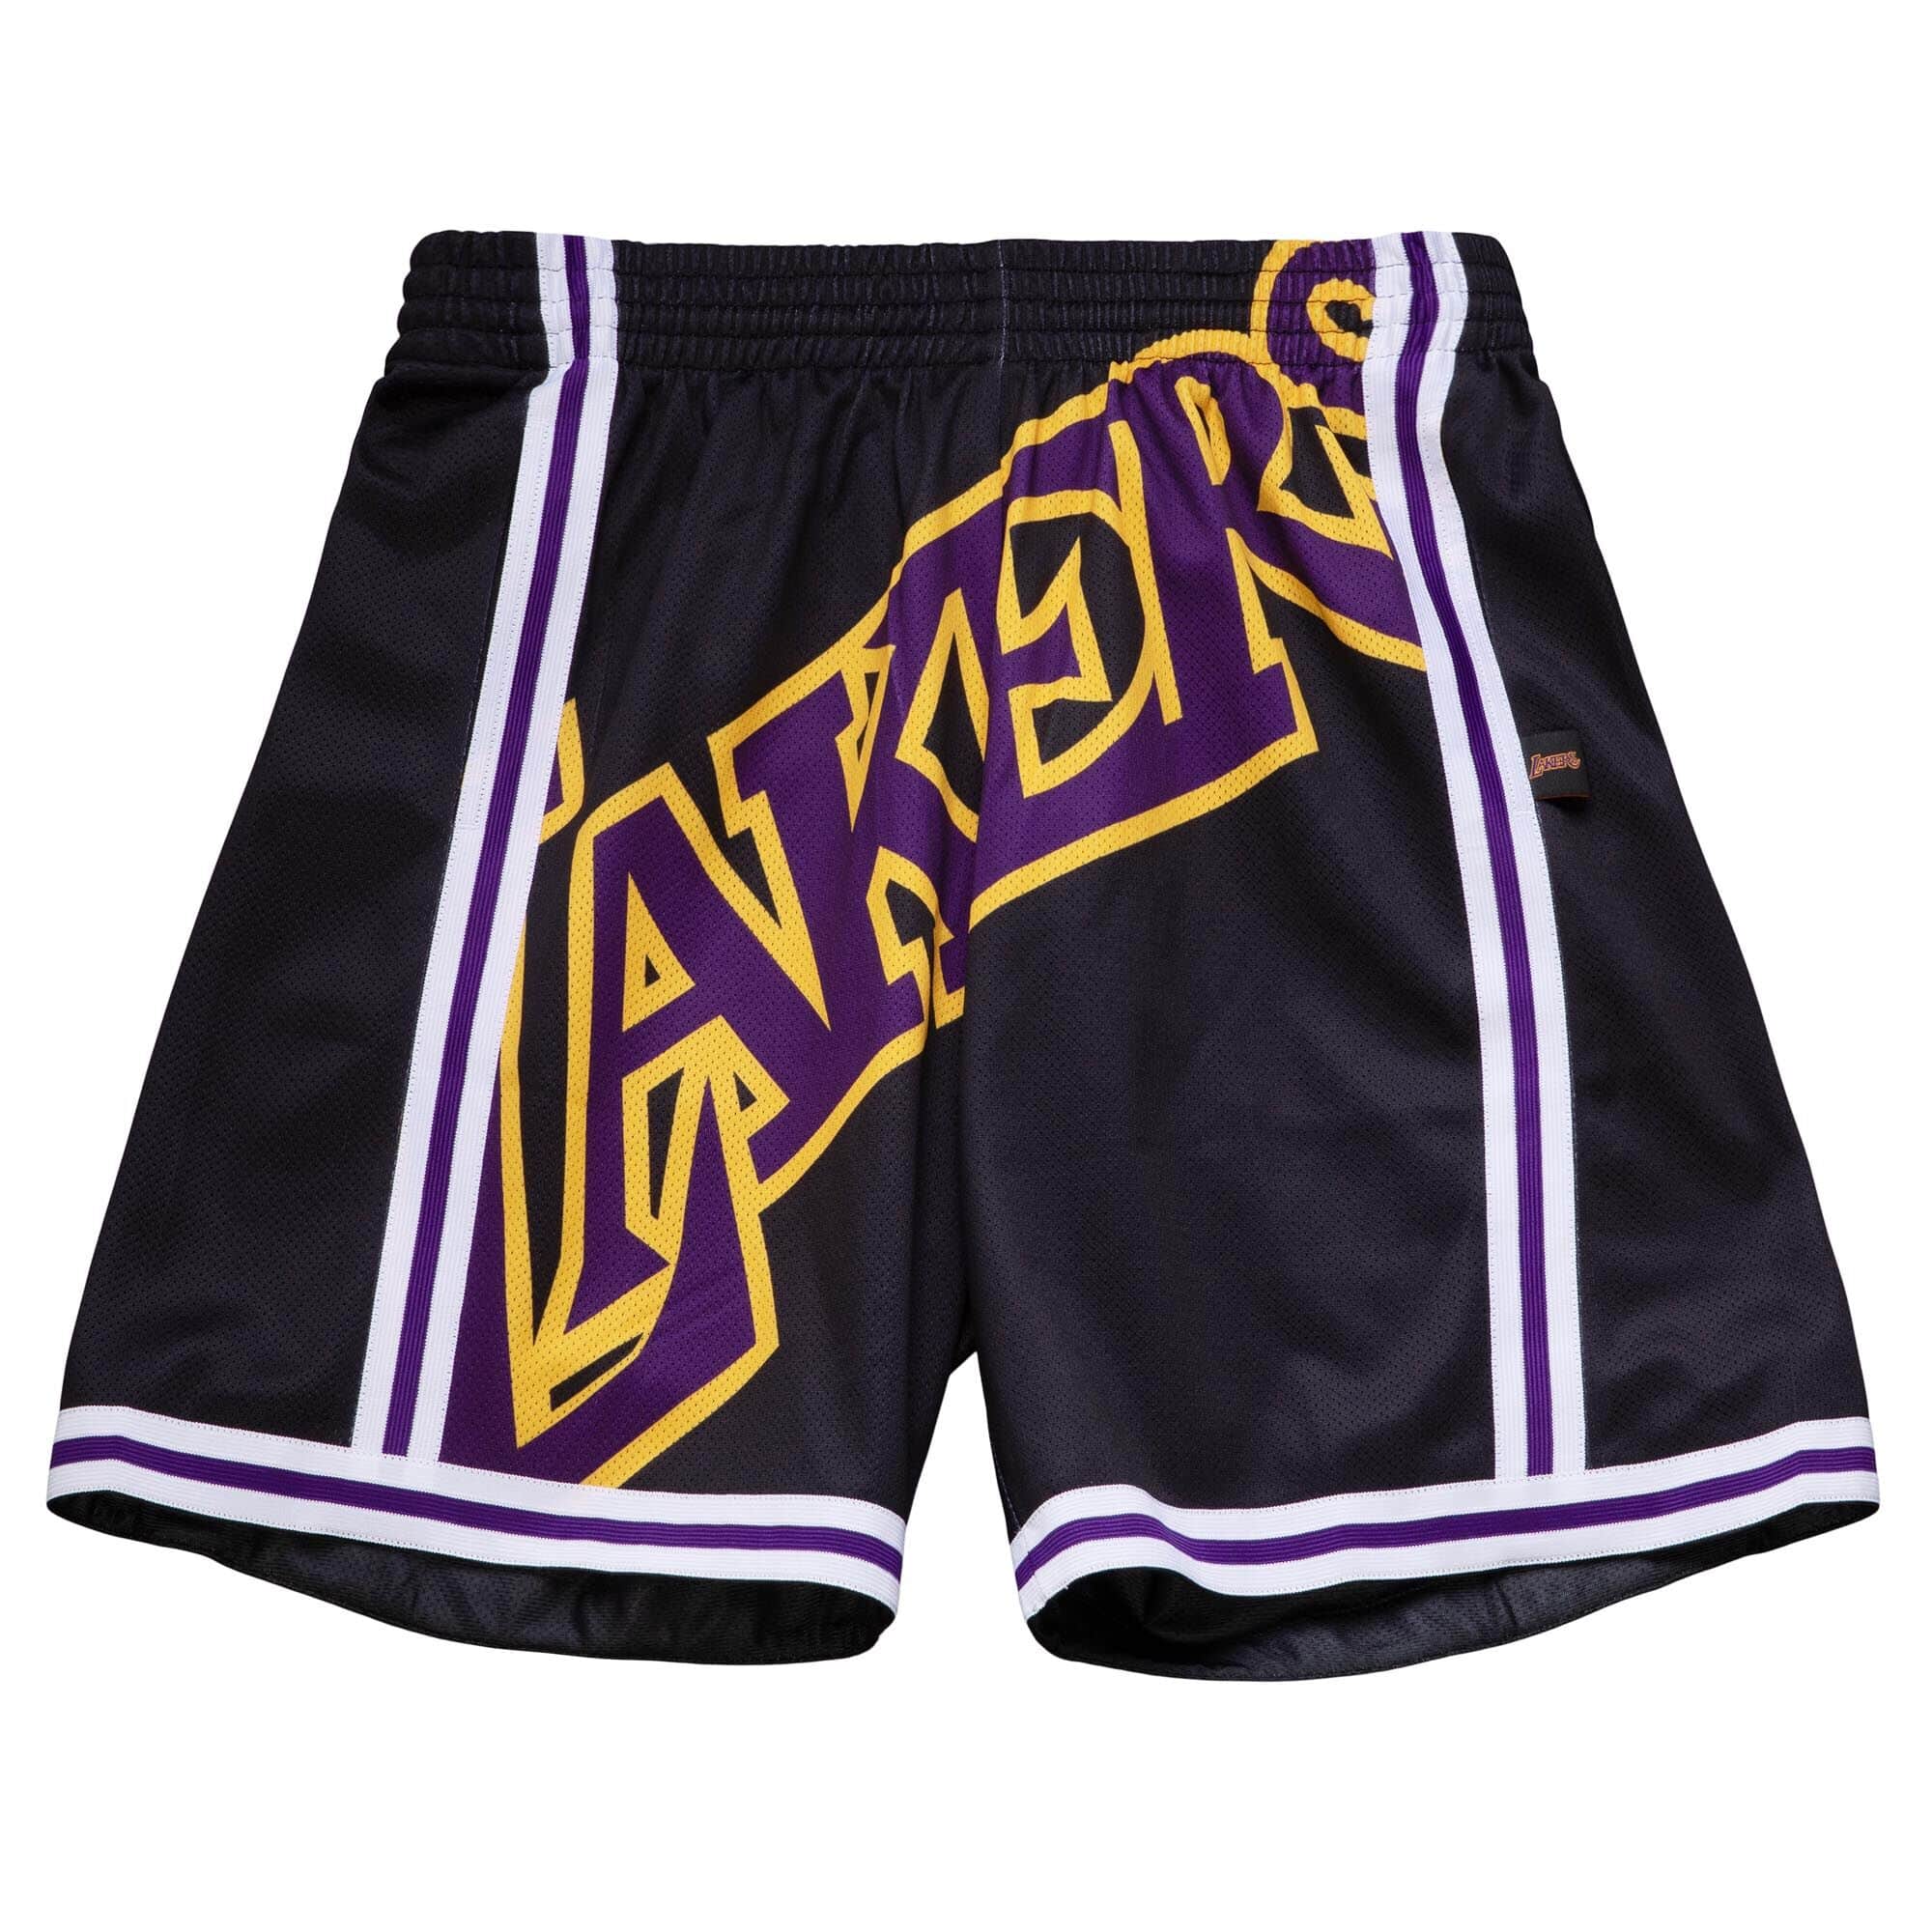 new laker shorts